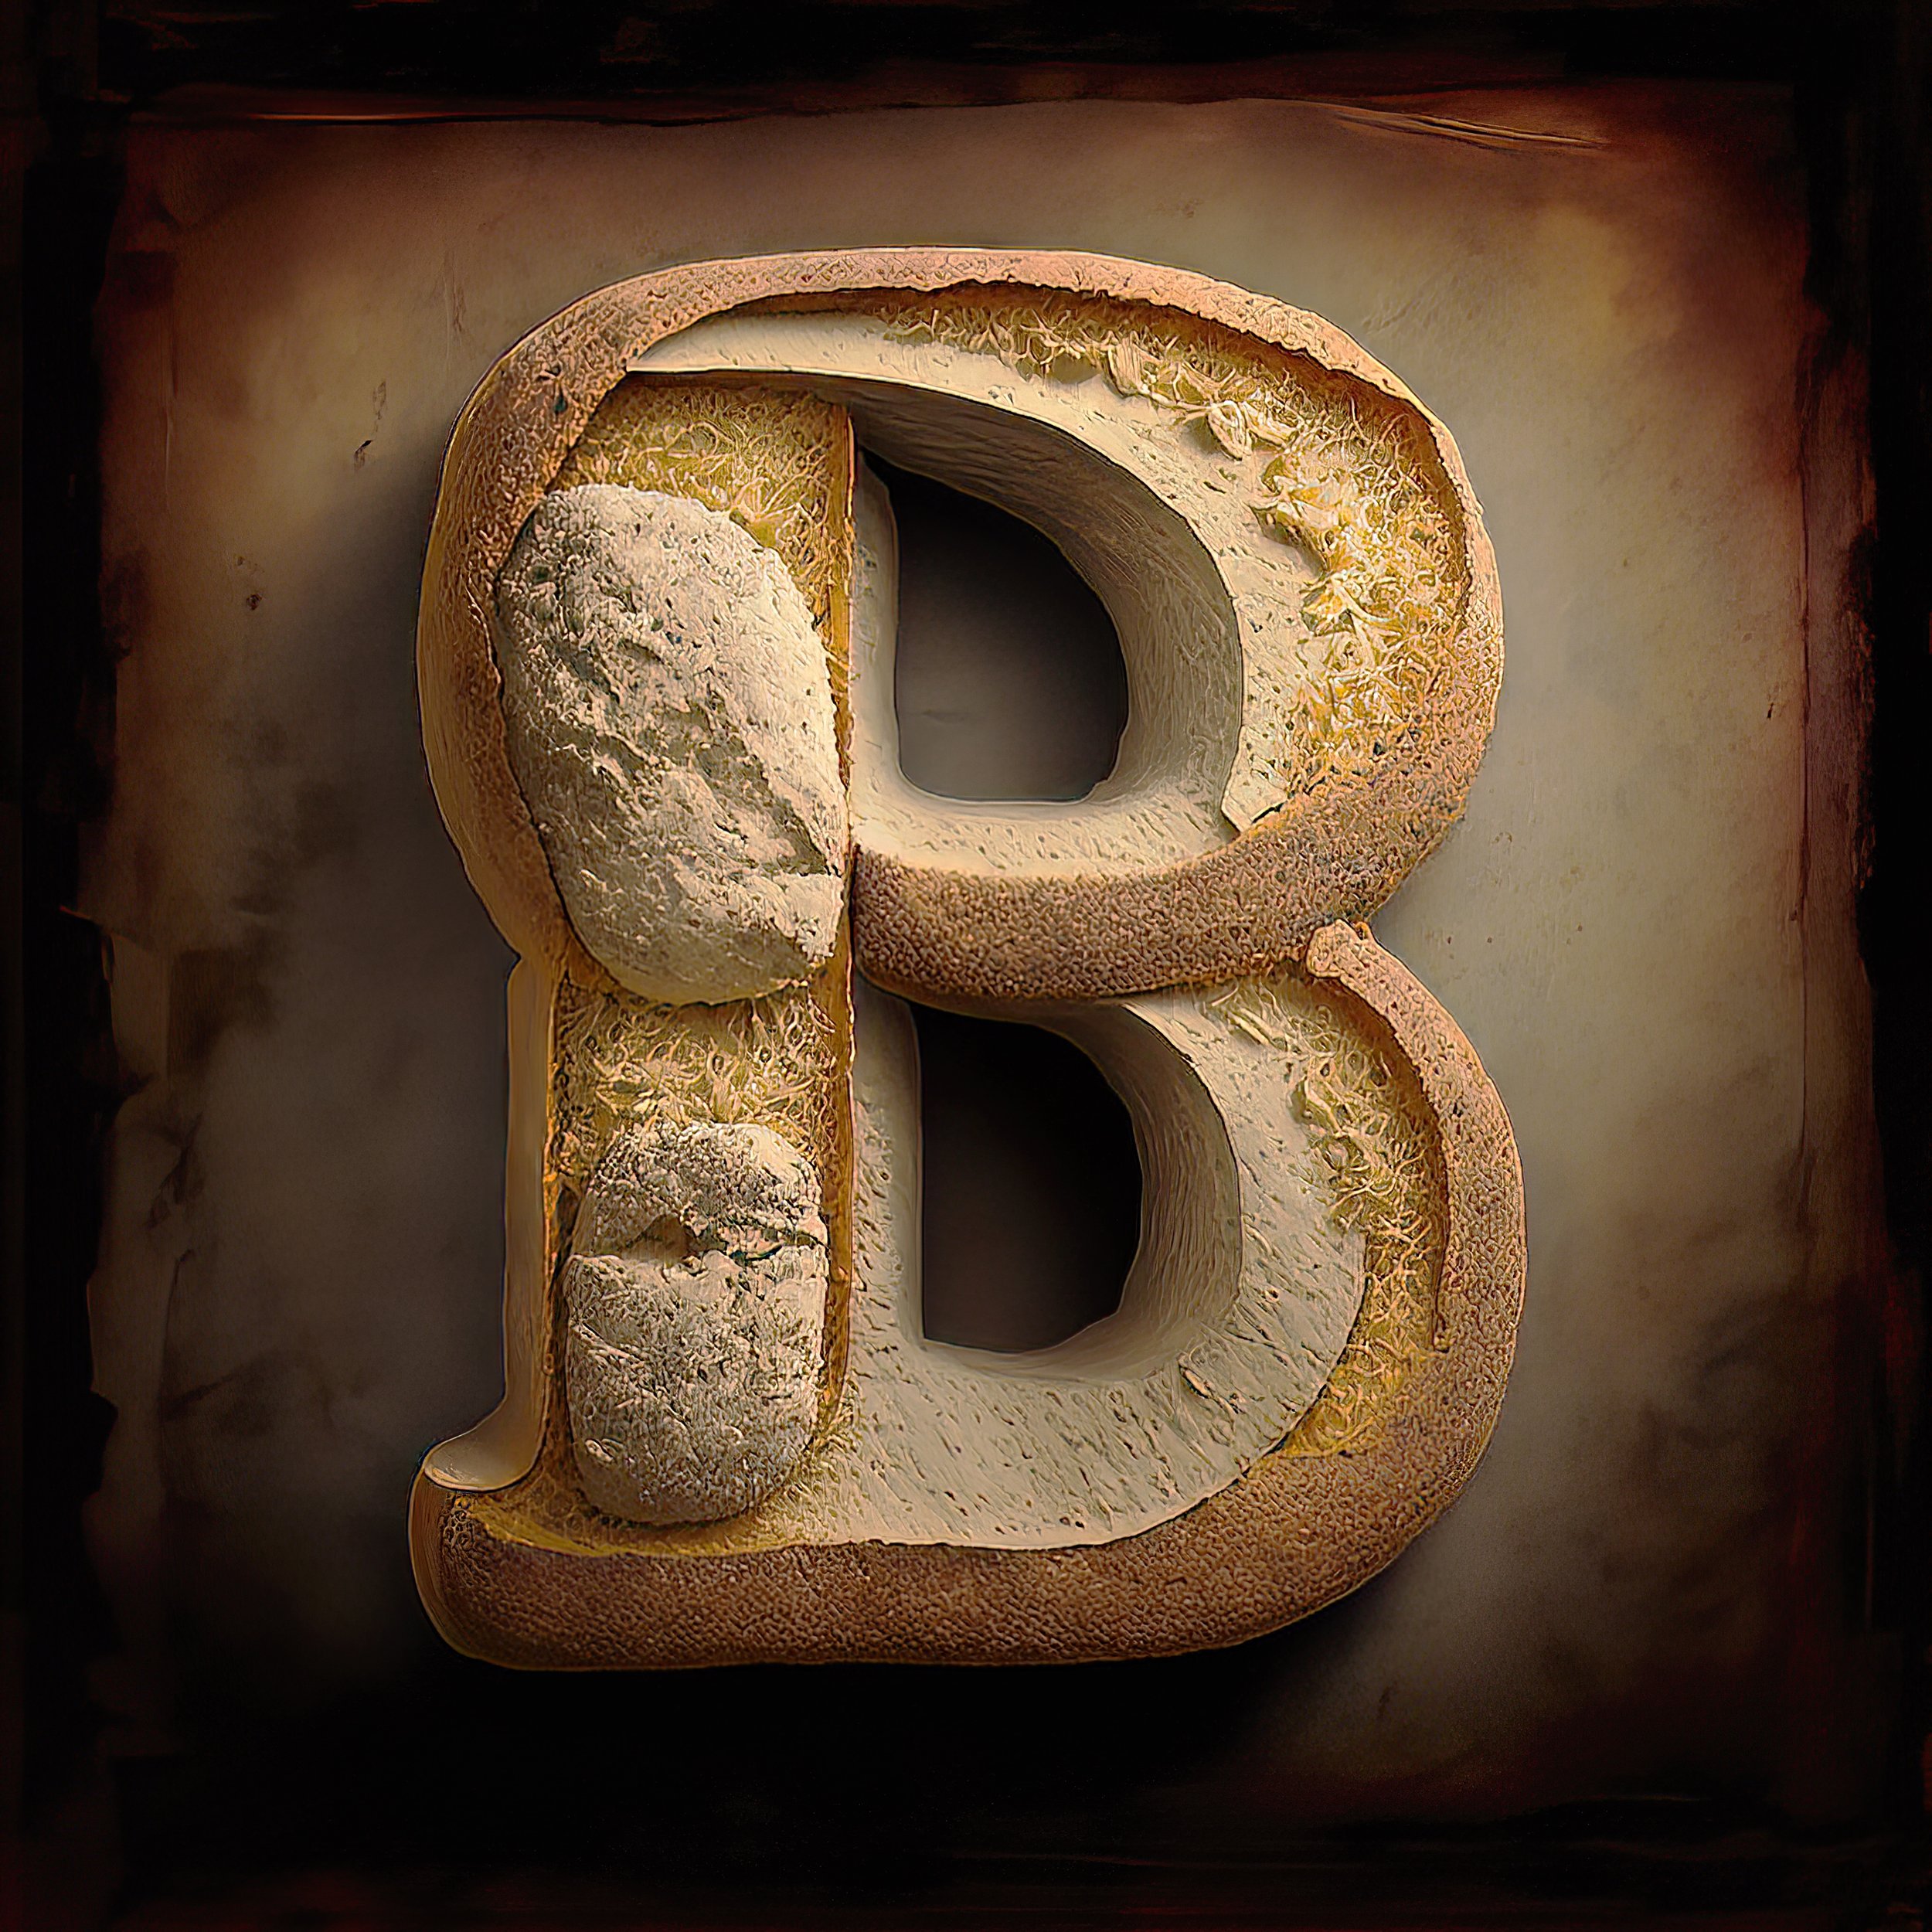 b is for bread-DeNoiseAI-low-light-SharpenAI-Motion-gigapixel-standard-scale-4_00x.jpg